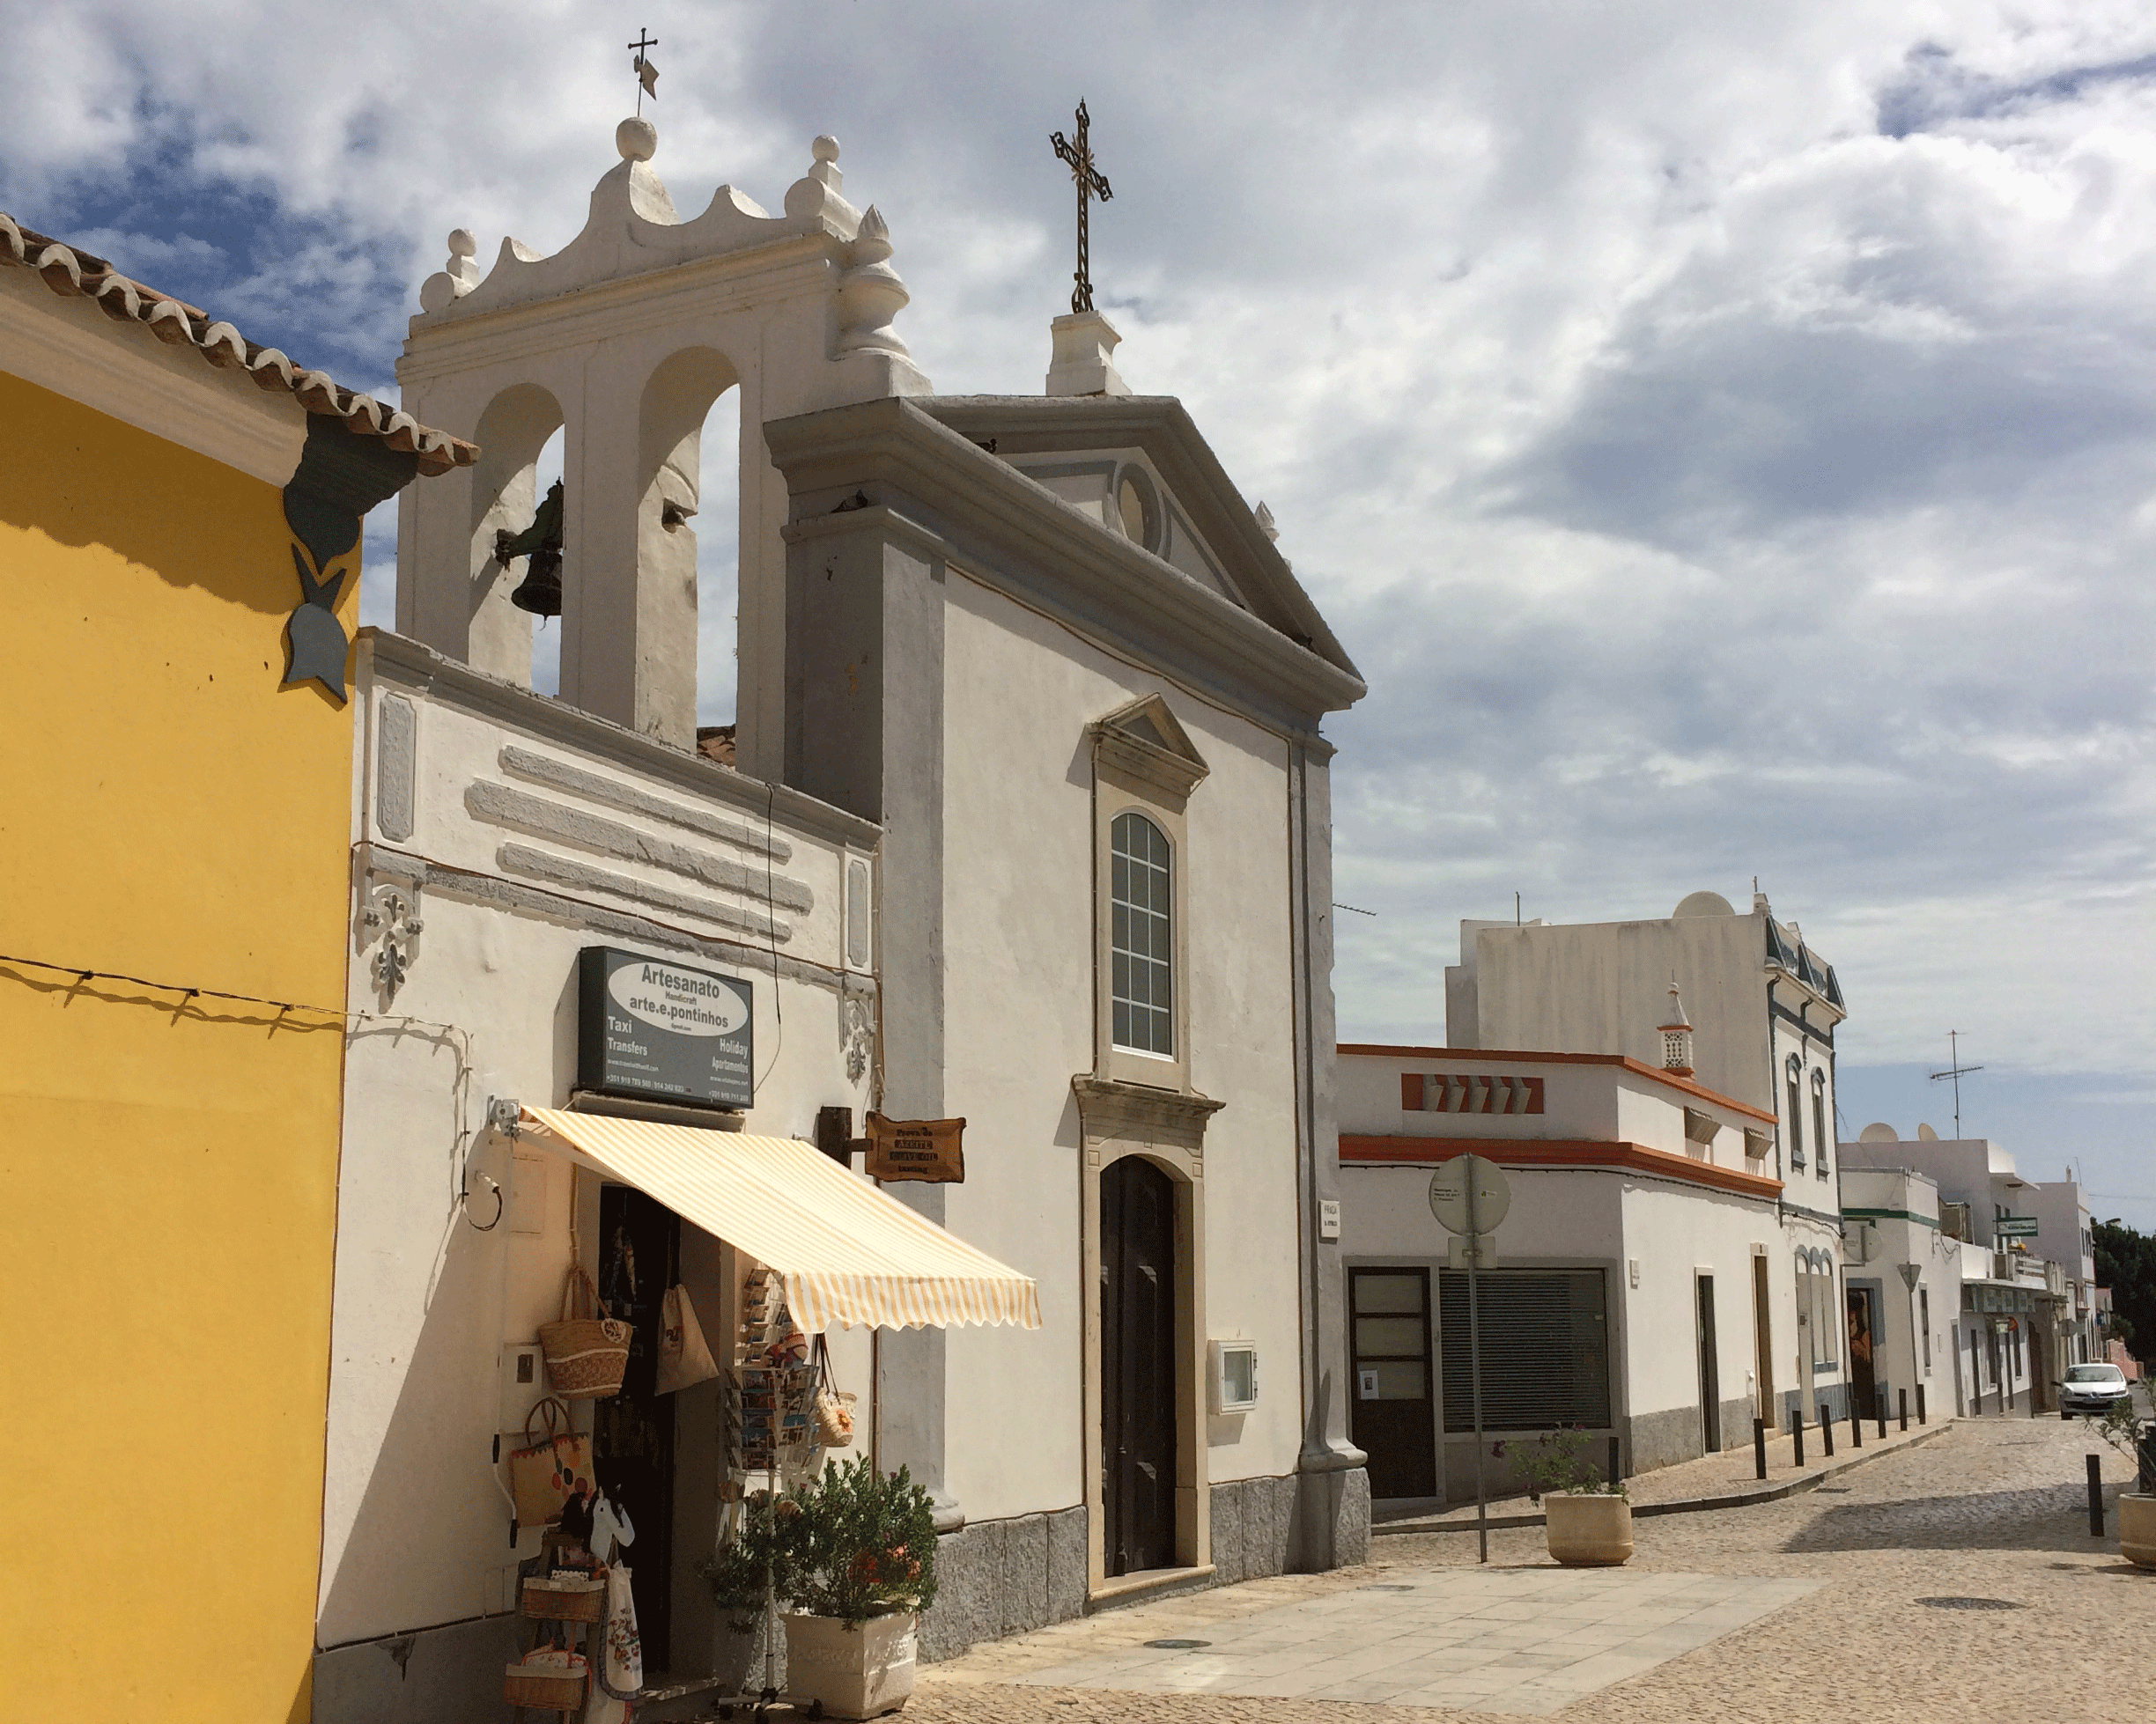 The central square in Moncarapacho, eastern Algarve